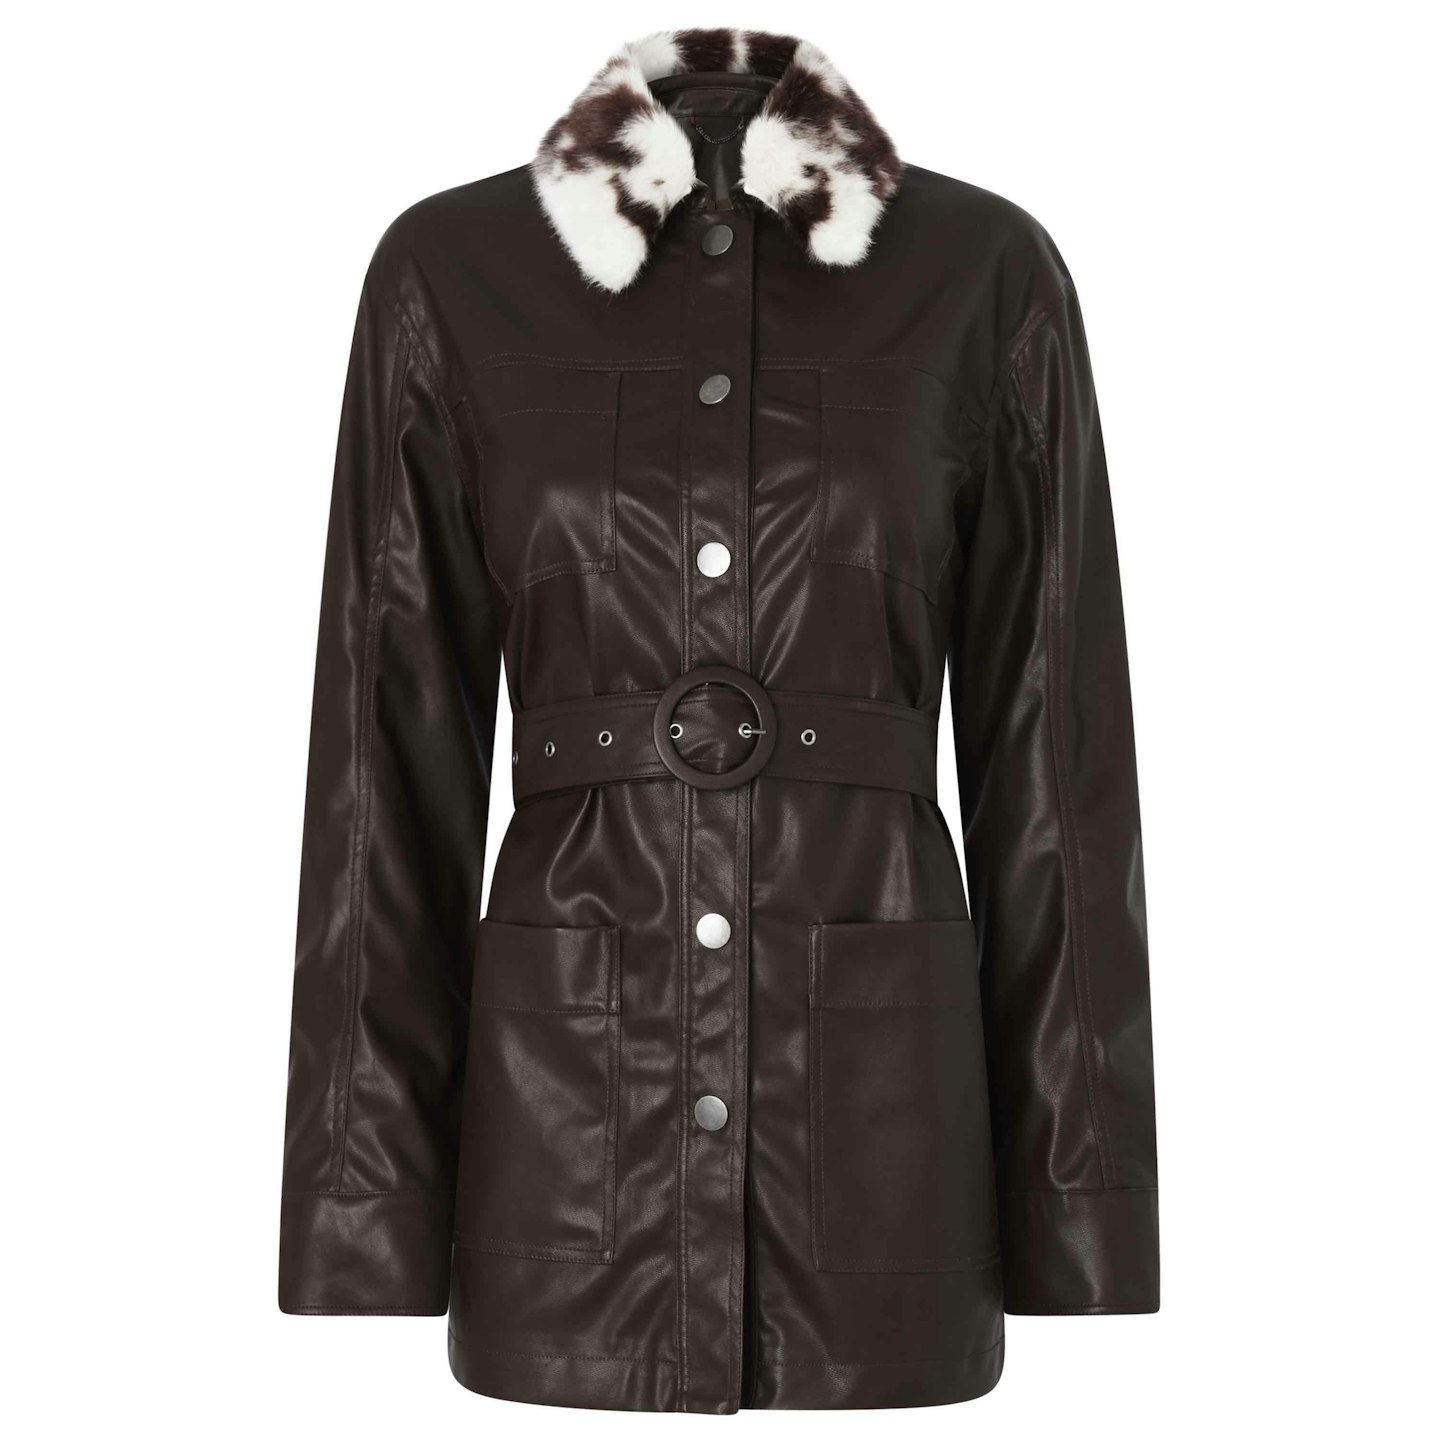 Brown Vegan Leather Jacket, £215